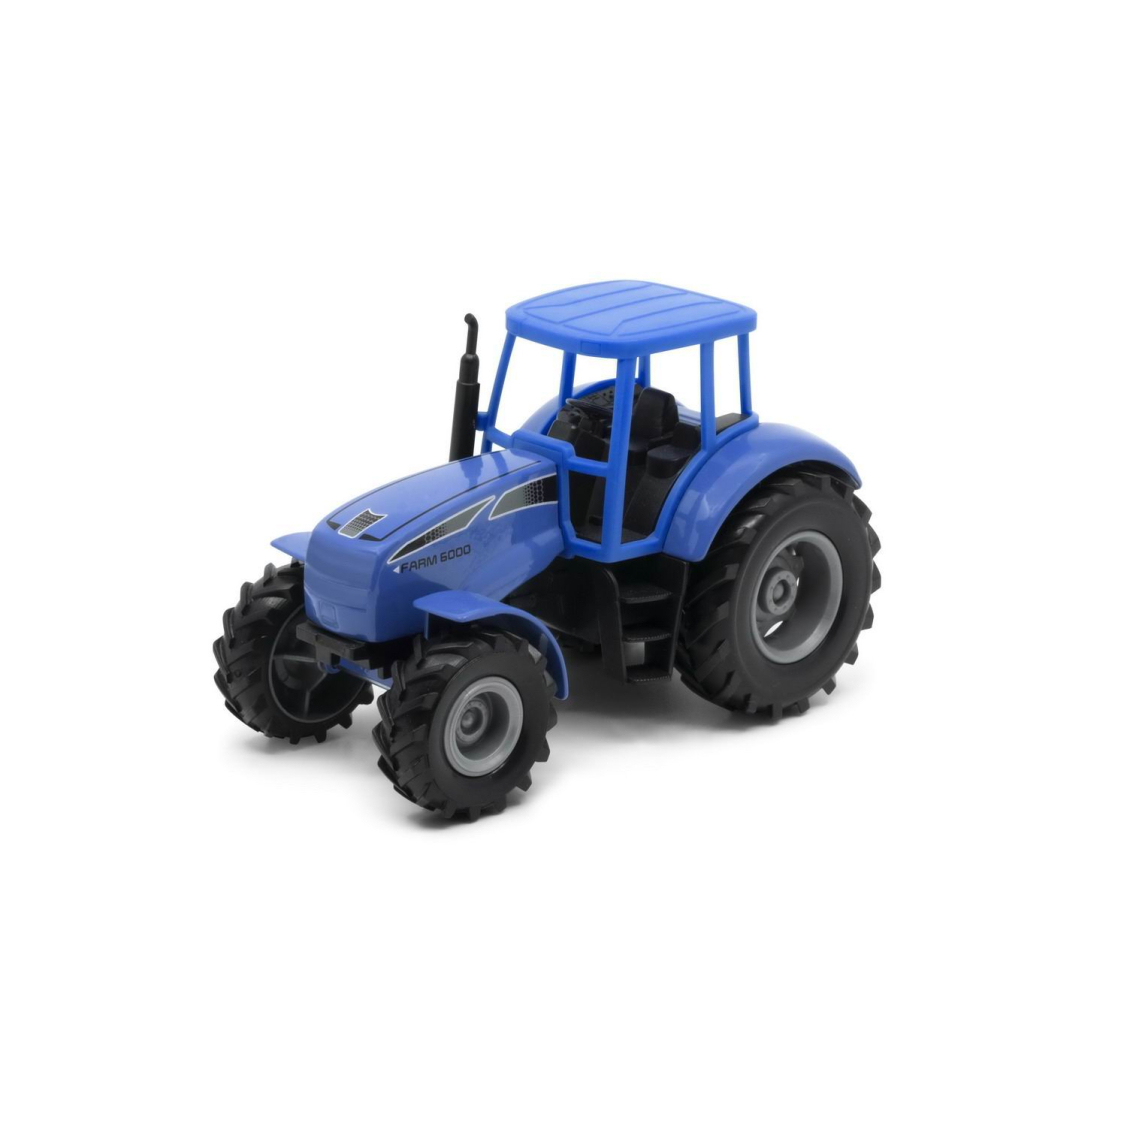 Машинка Welly Трактор синий машинка для гибкого трека magic tracks с зацепами для петли синий